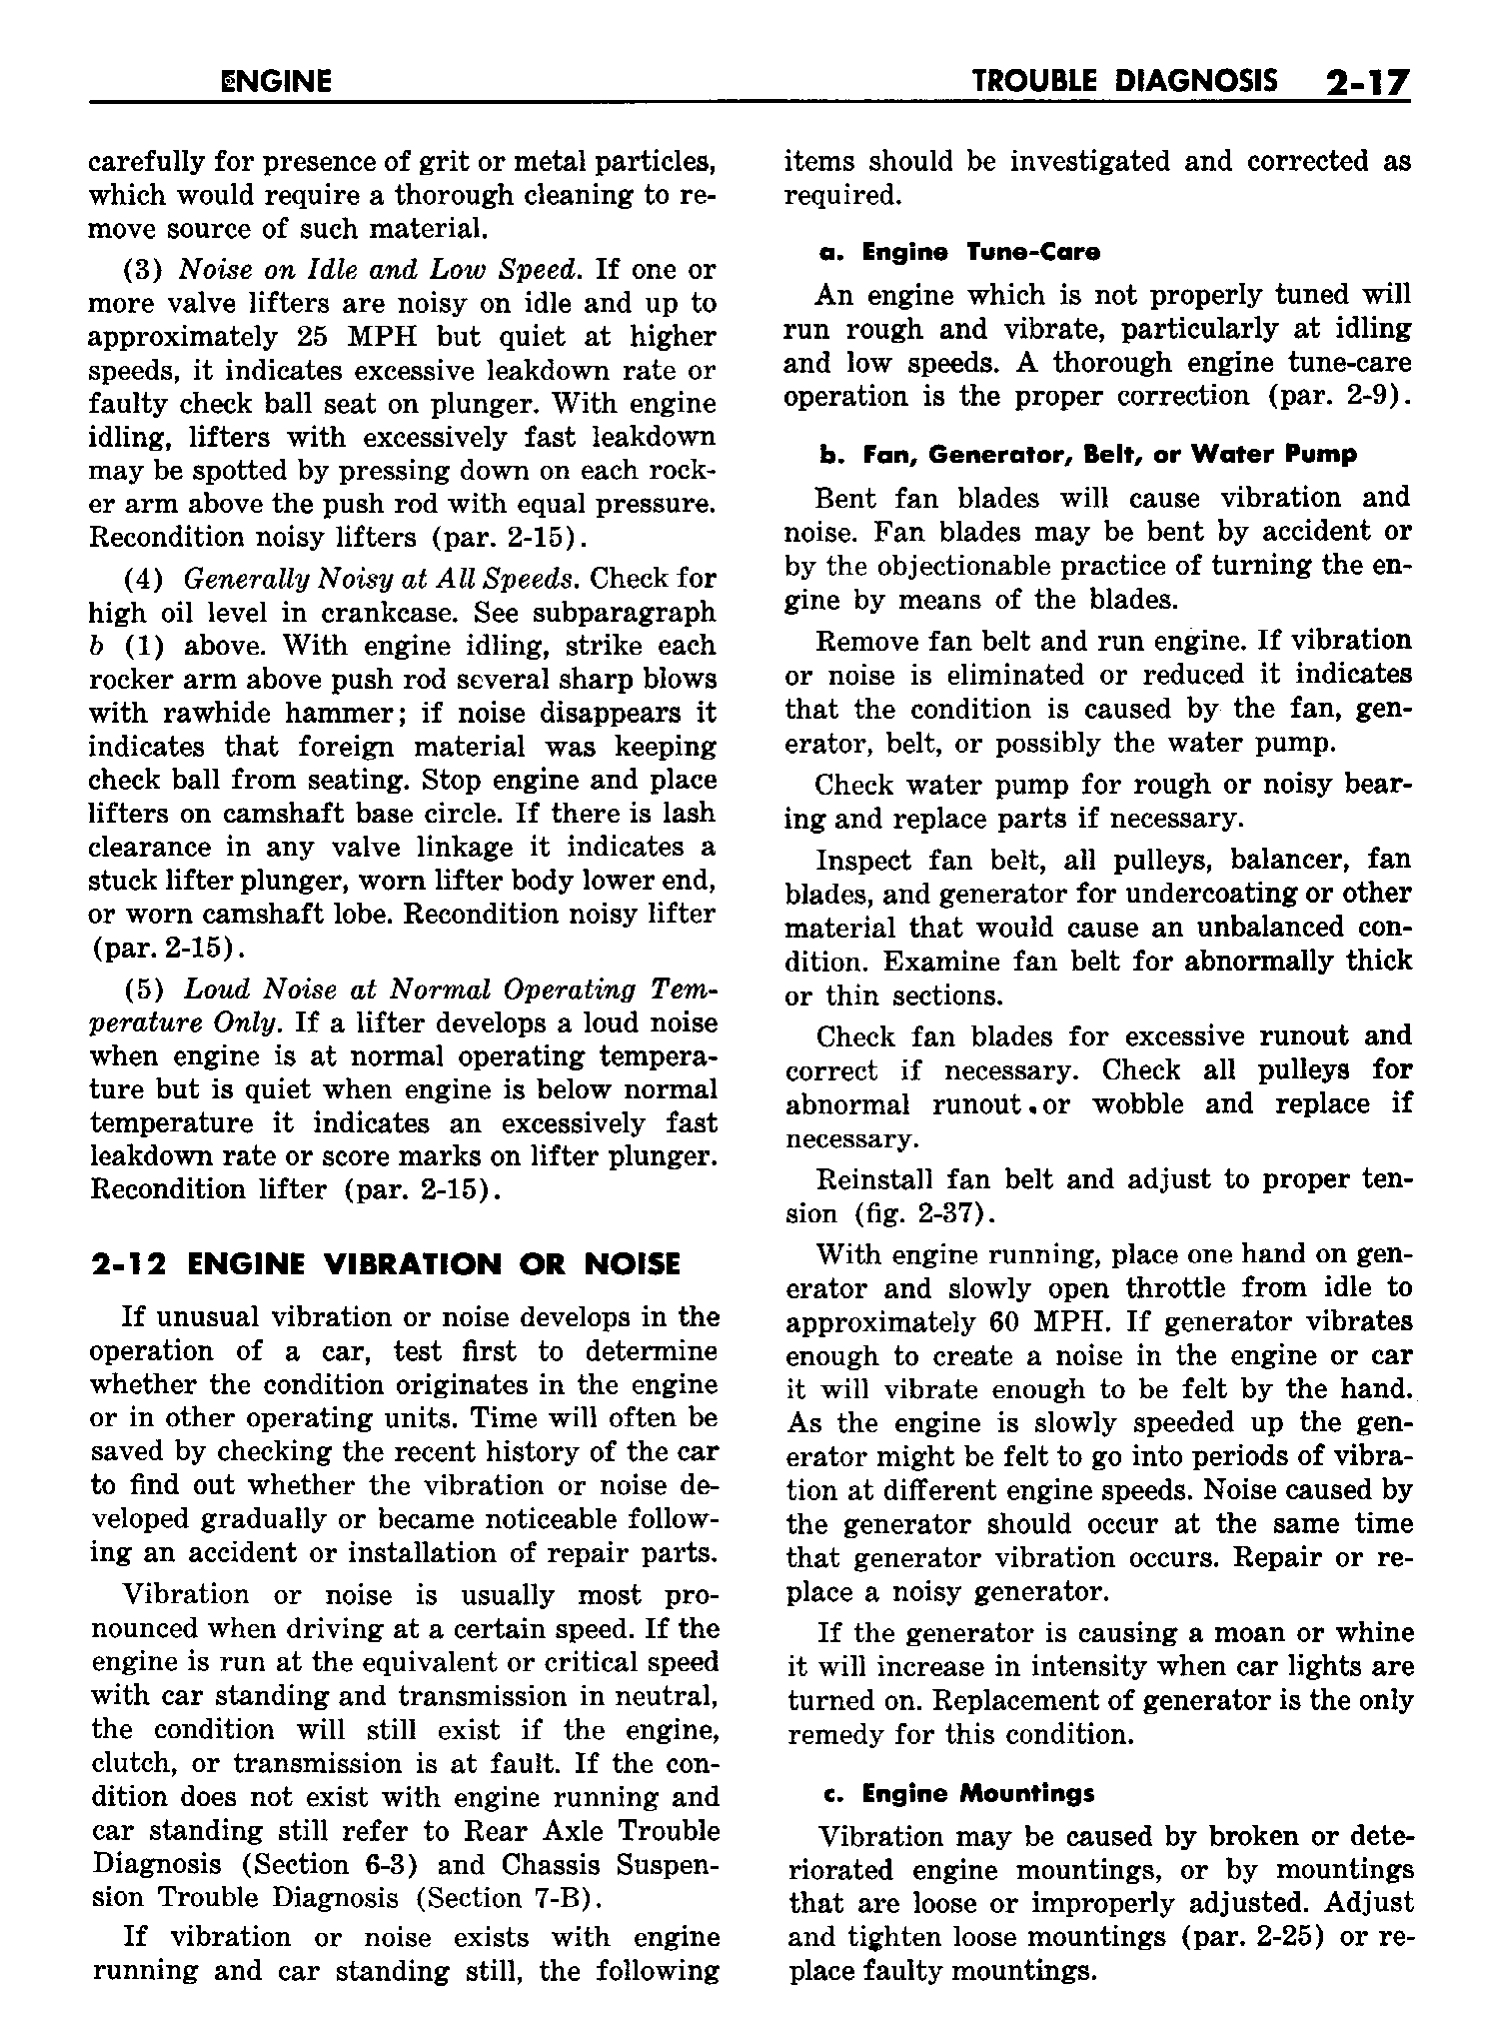 n_03 1958 Buick Shop Manual - Engine_17.jpg